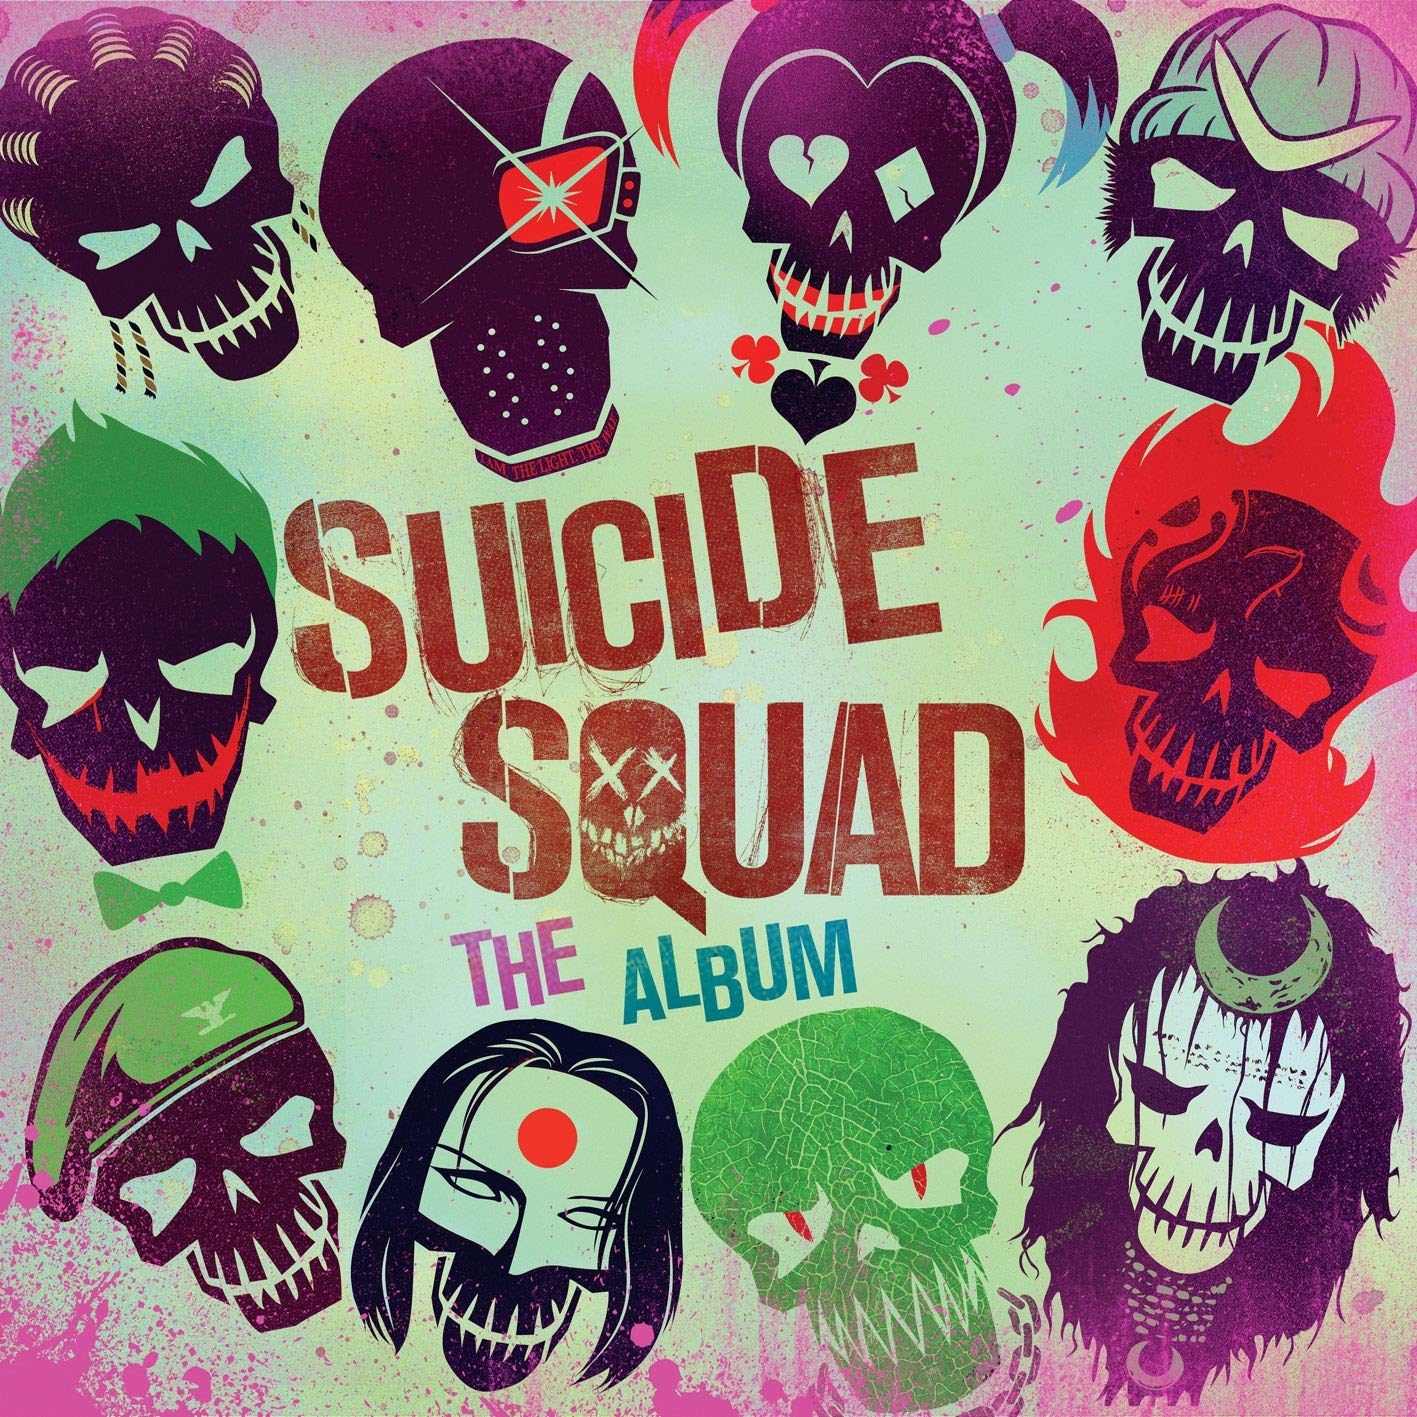 The album cover for Suicide Squad